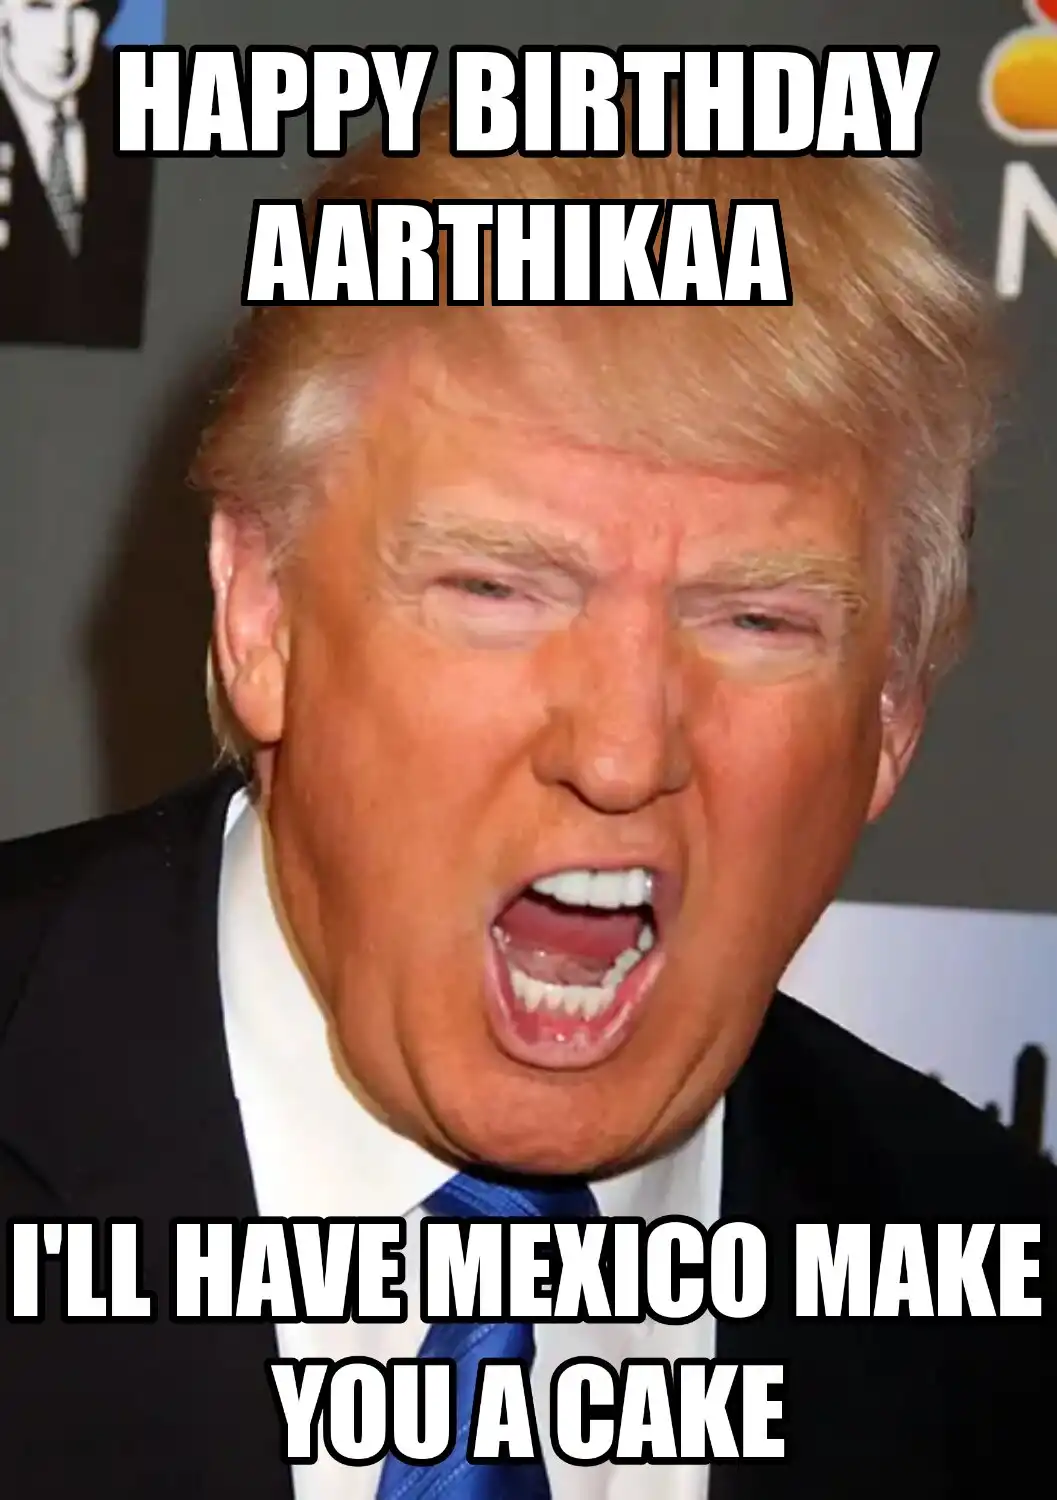 Happy Birthday Aarthikaa Mexico Make You A Cake Meme